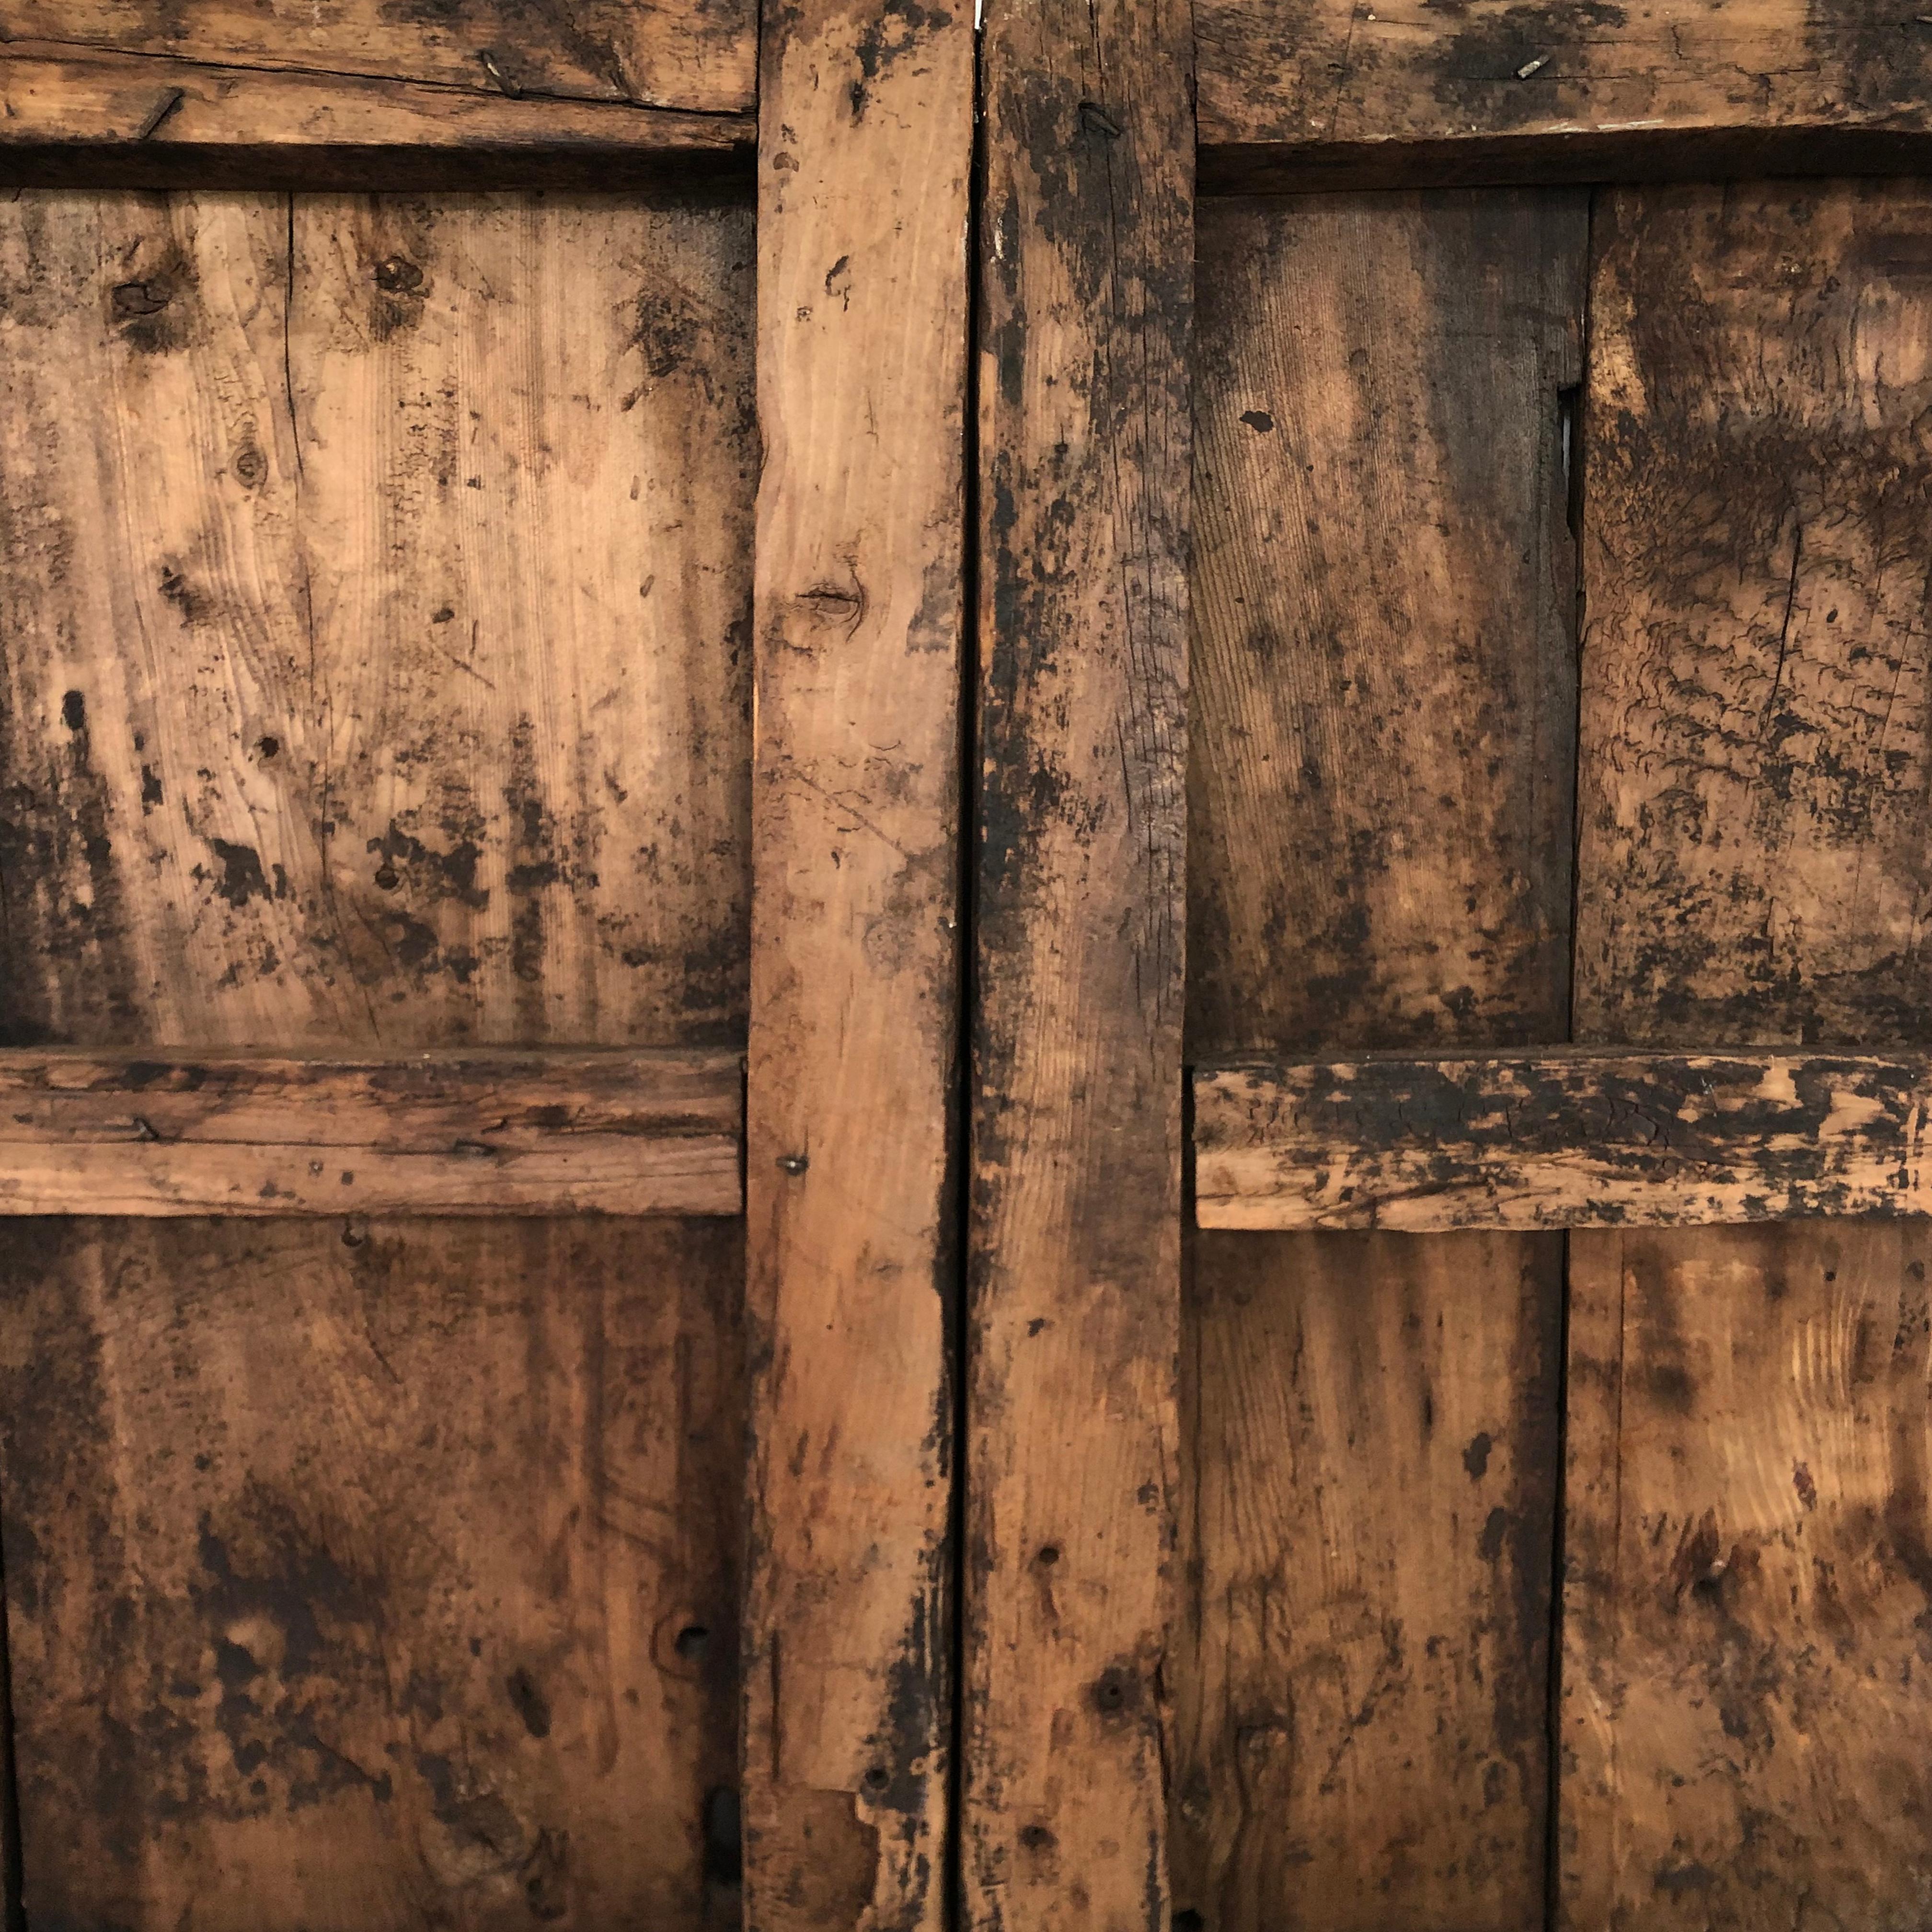 Hand-Crafted 19th Century Sabino Wood Door Found in Western México